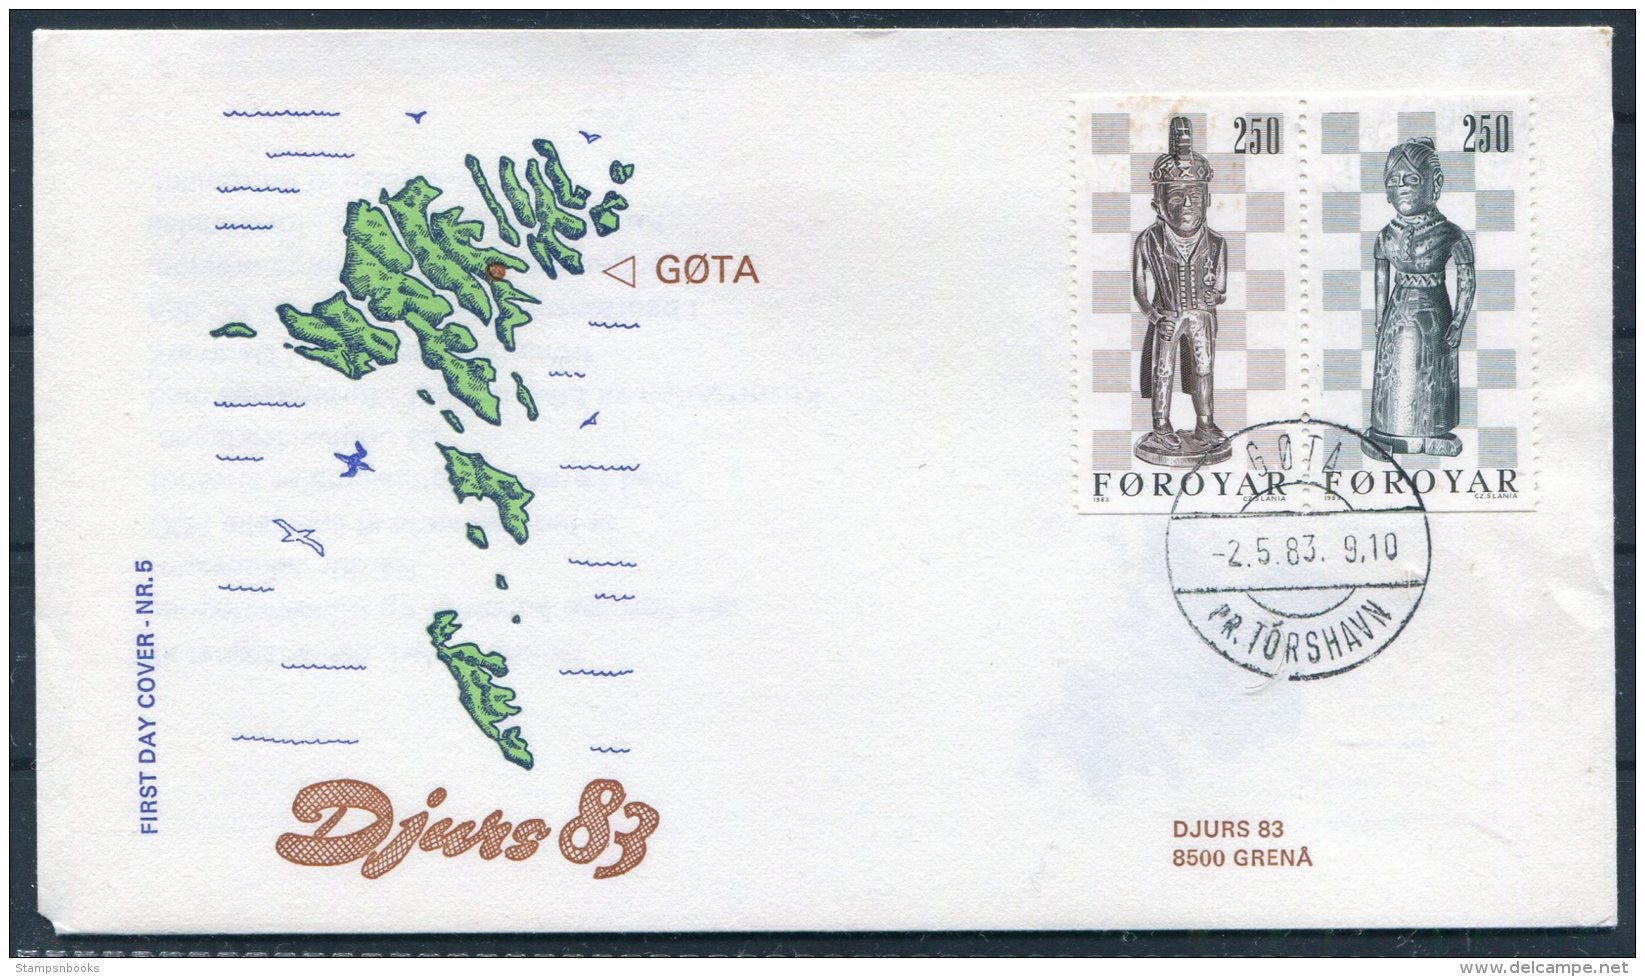 1983 Faroe Islands / Faroyar Denamrk Philatelic Exhibition DJURS 83 Grena Cover. Gota Pr.Torshavn. Slania Chessmen - Färöer Inseln